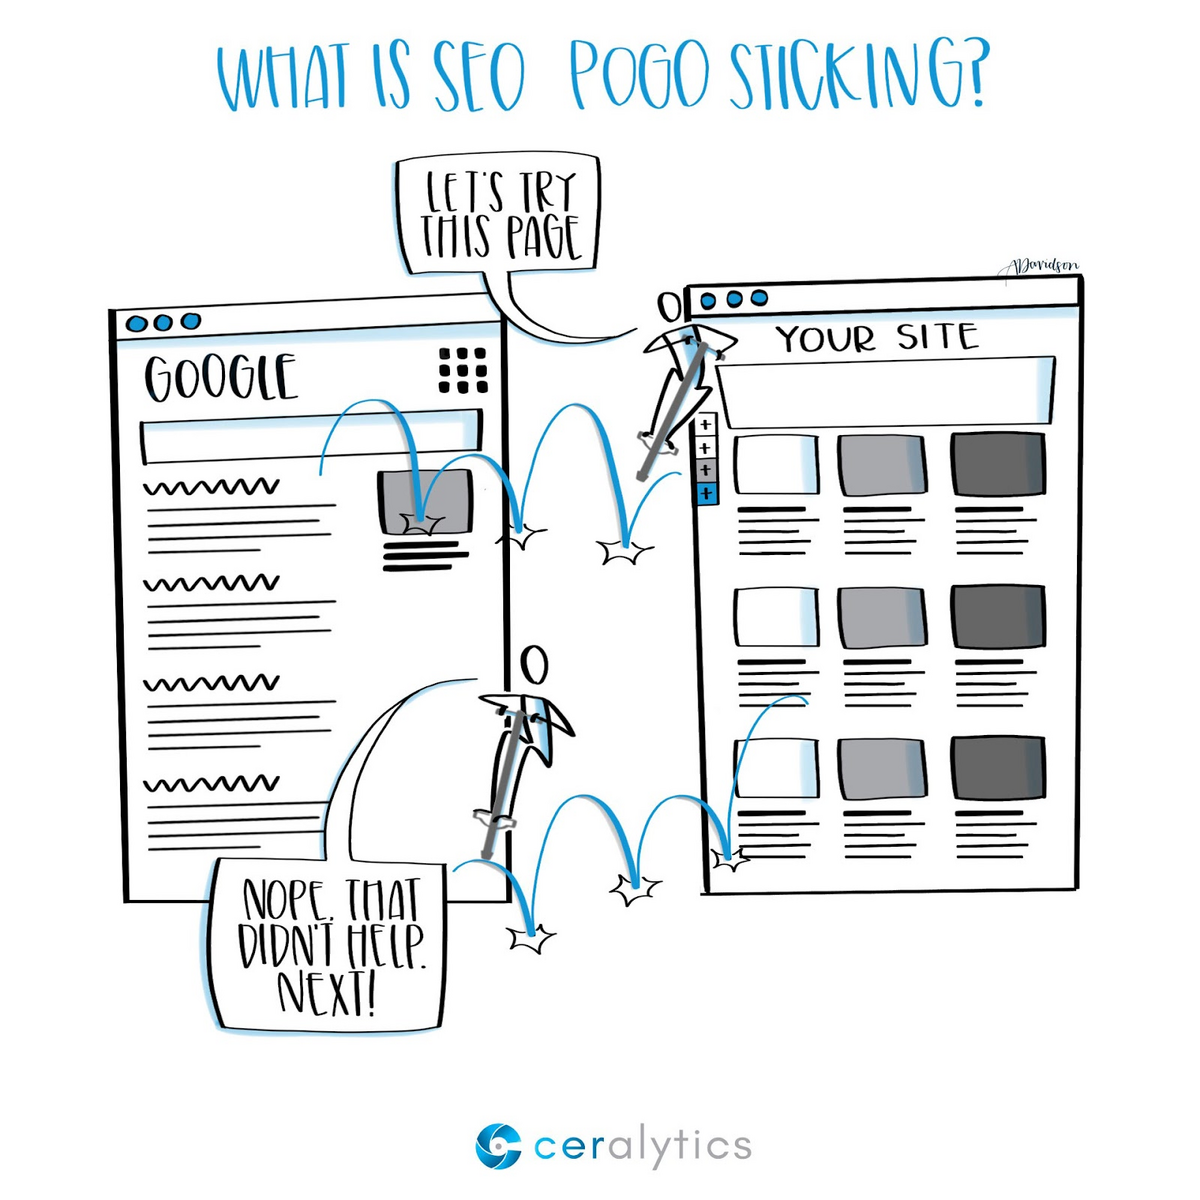 Seo-pogo-sticking